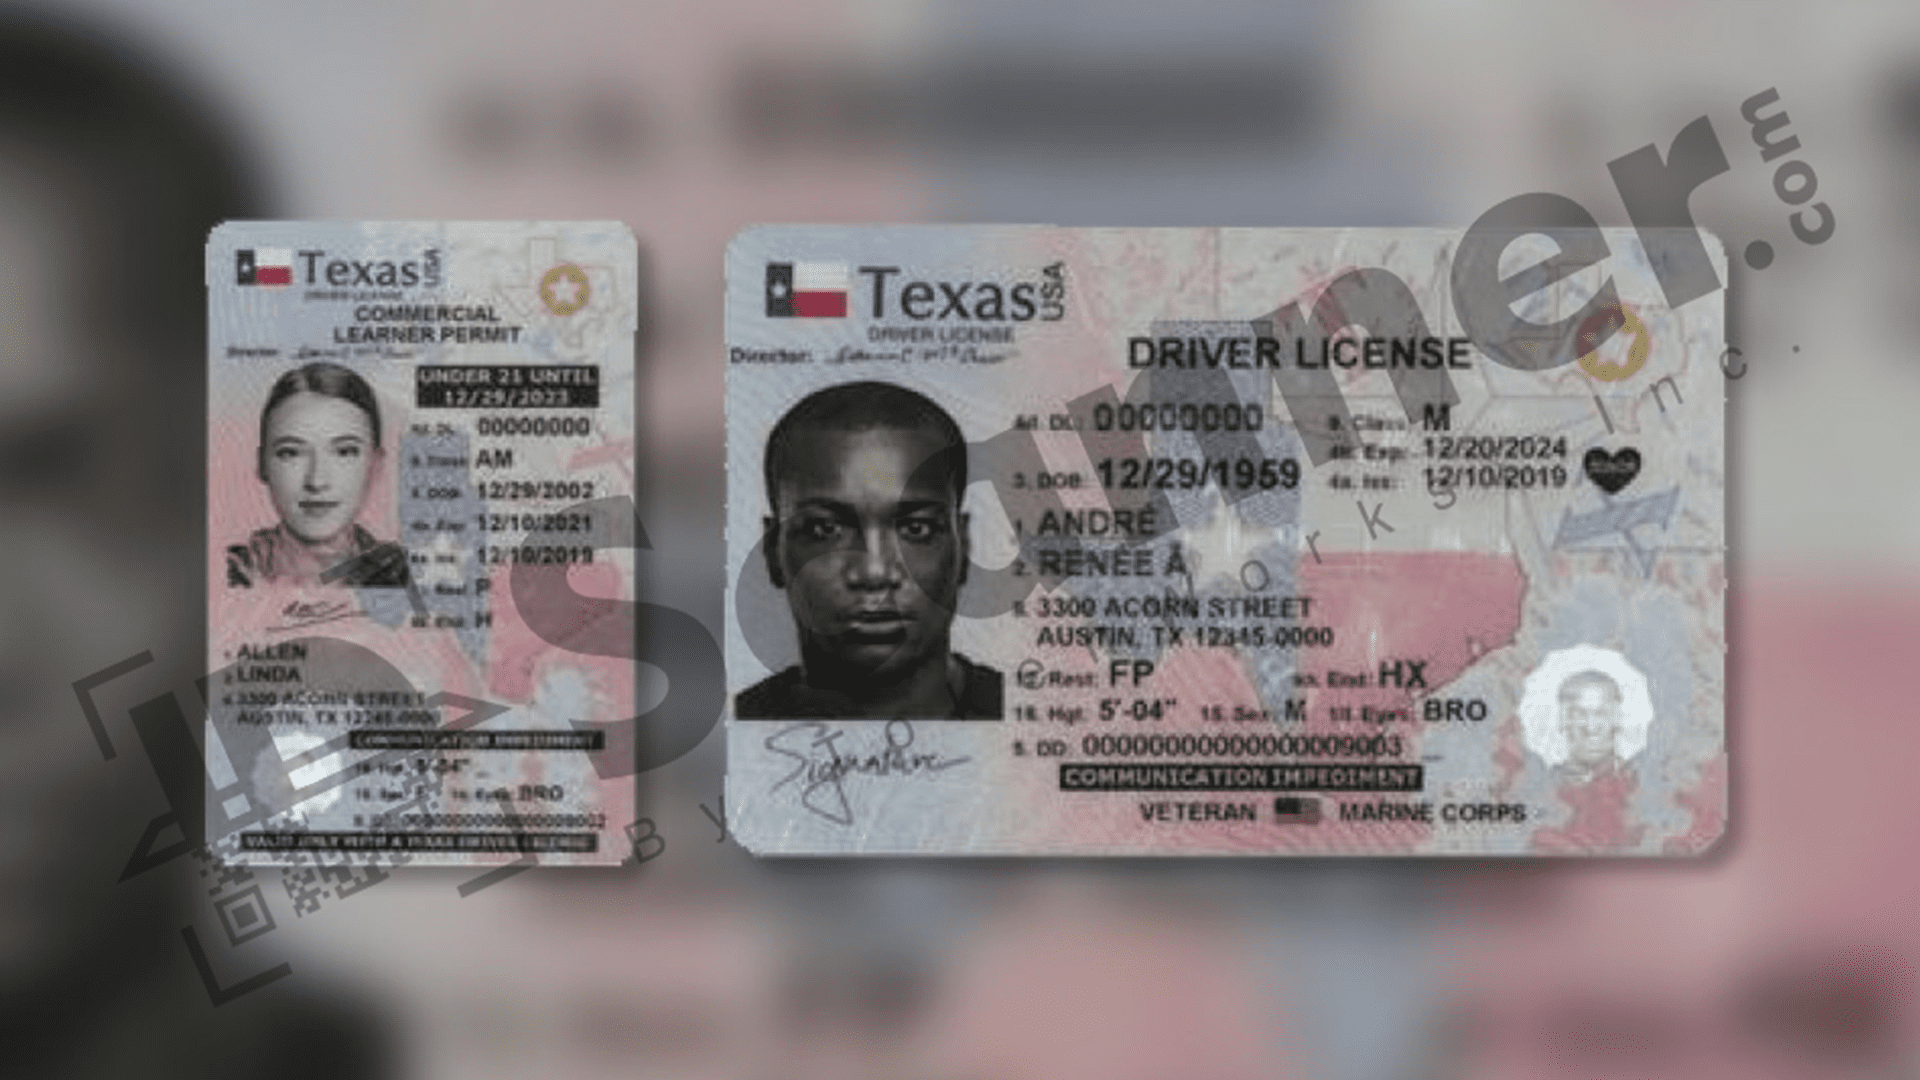 driver license change of address texas